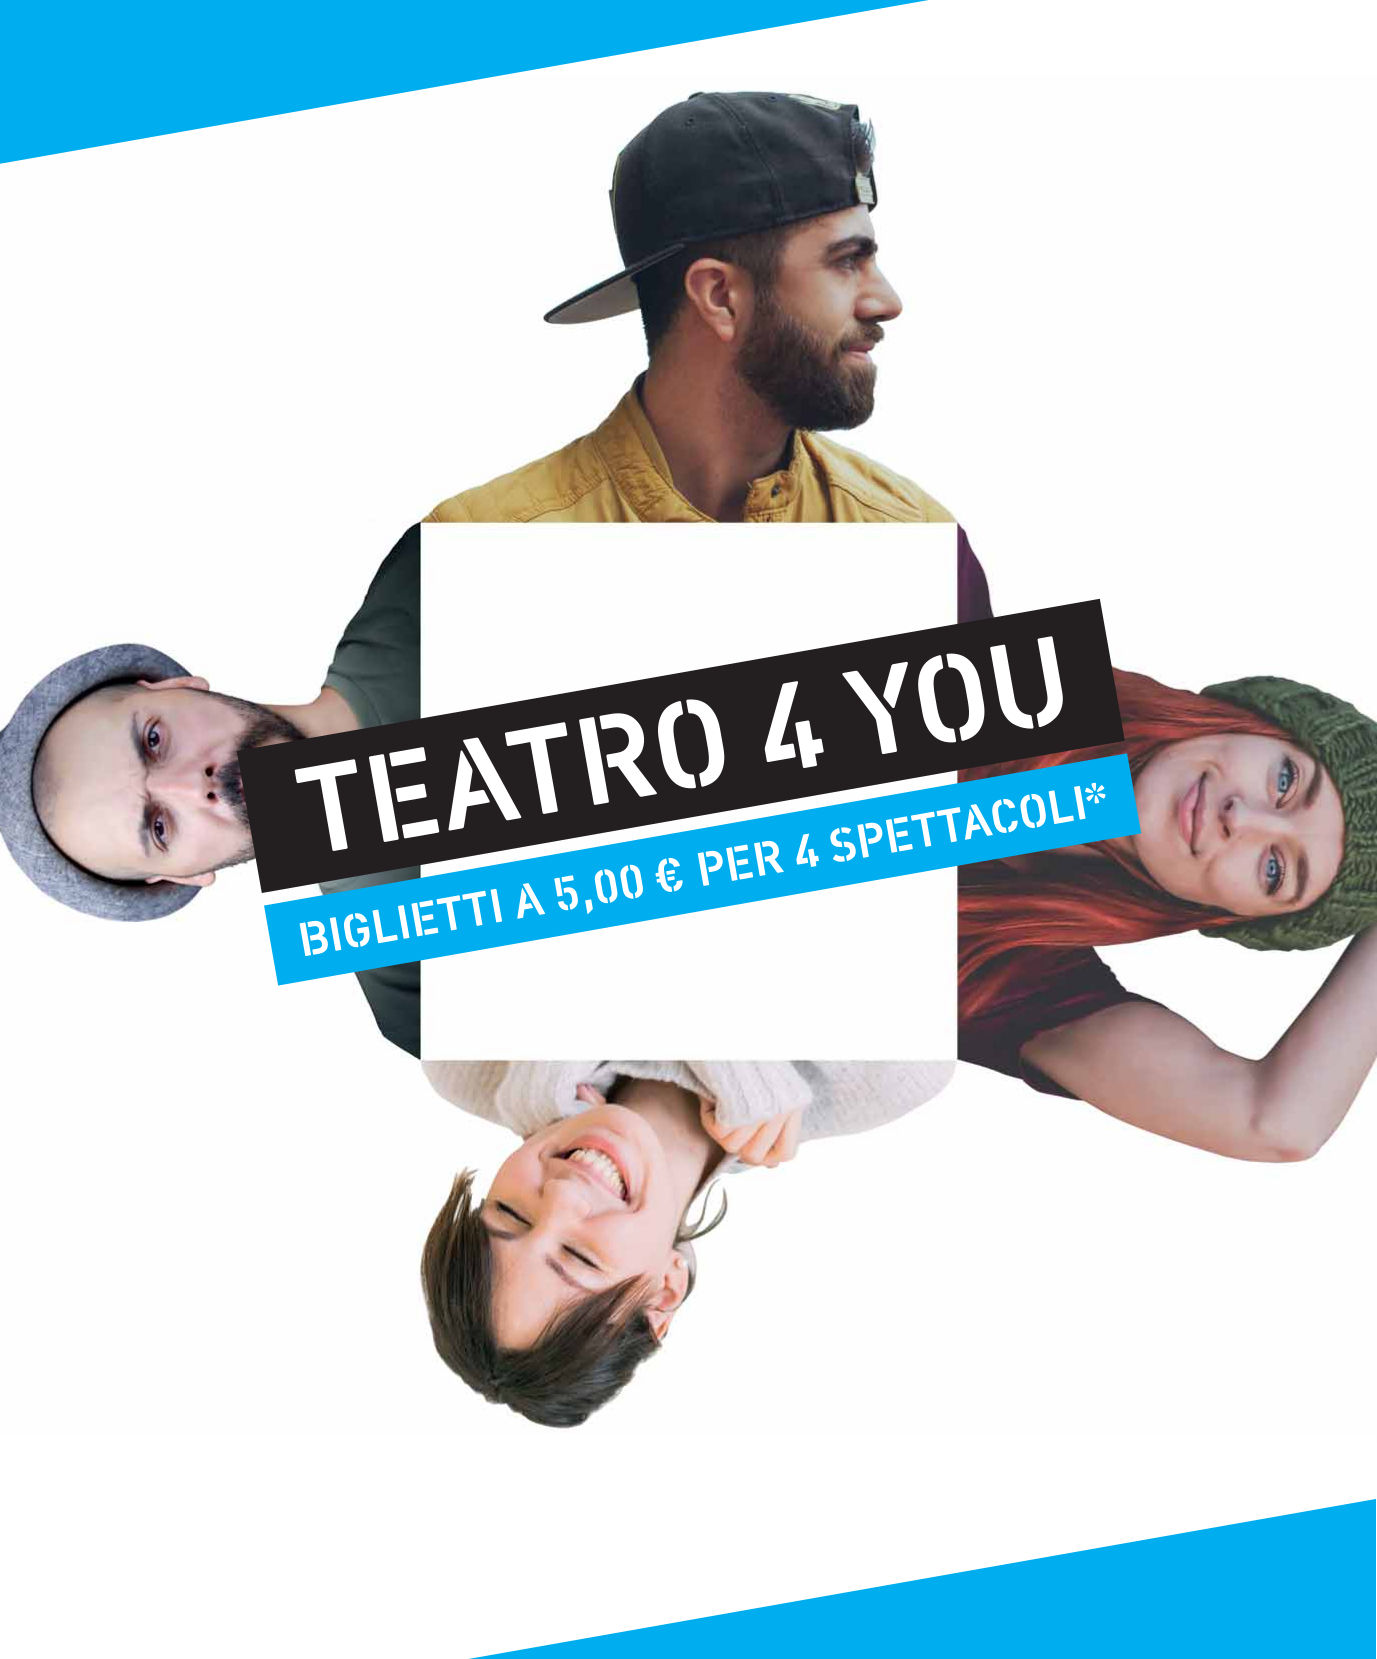 Teatro 4 You